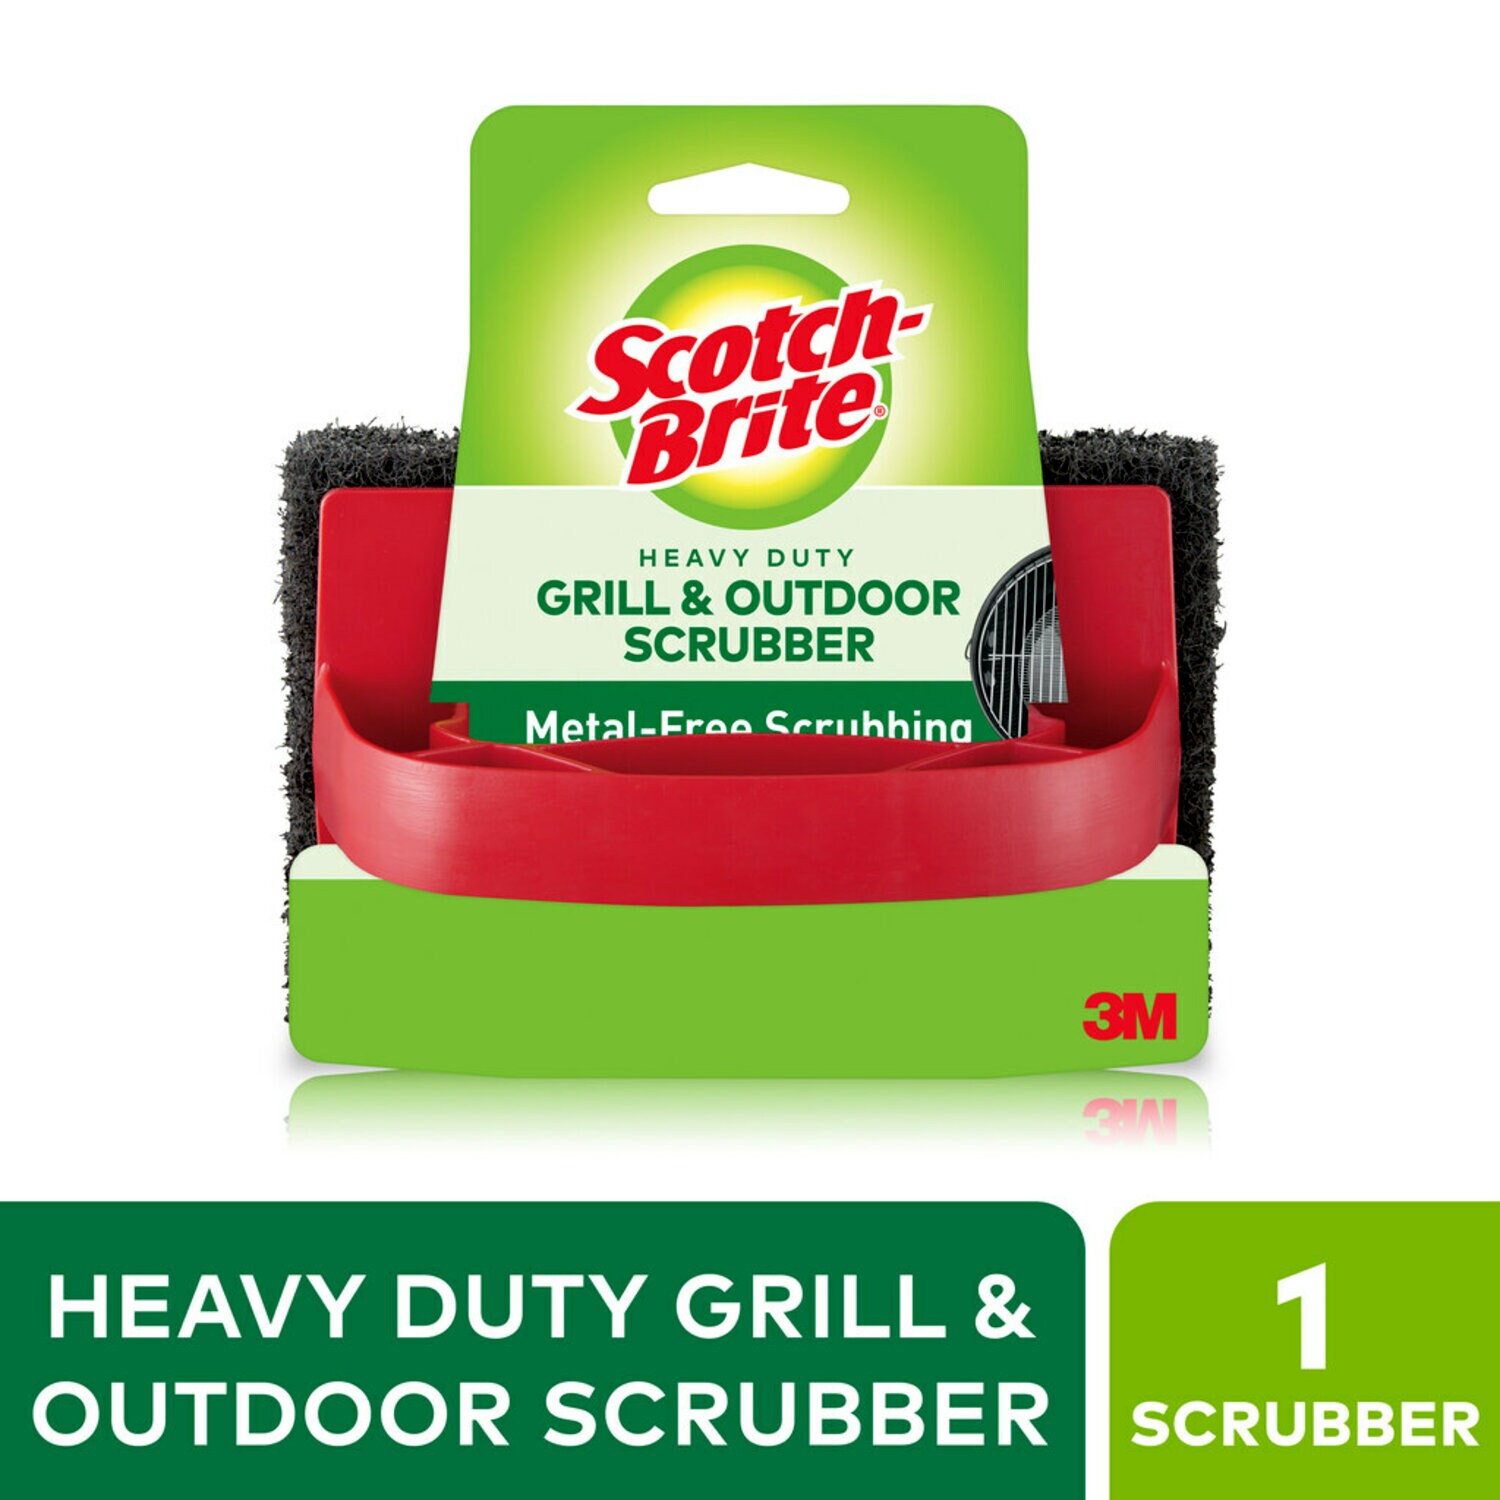 7100057465 - Scotch-Brite Heavy Duty Handled Grill Scrub 7721, 5.8 in x 3.8 in x 0
mm (147 mm x 96 mm), 12/1, 1 pack